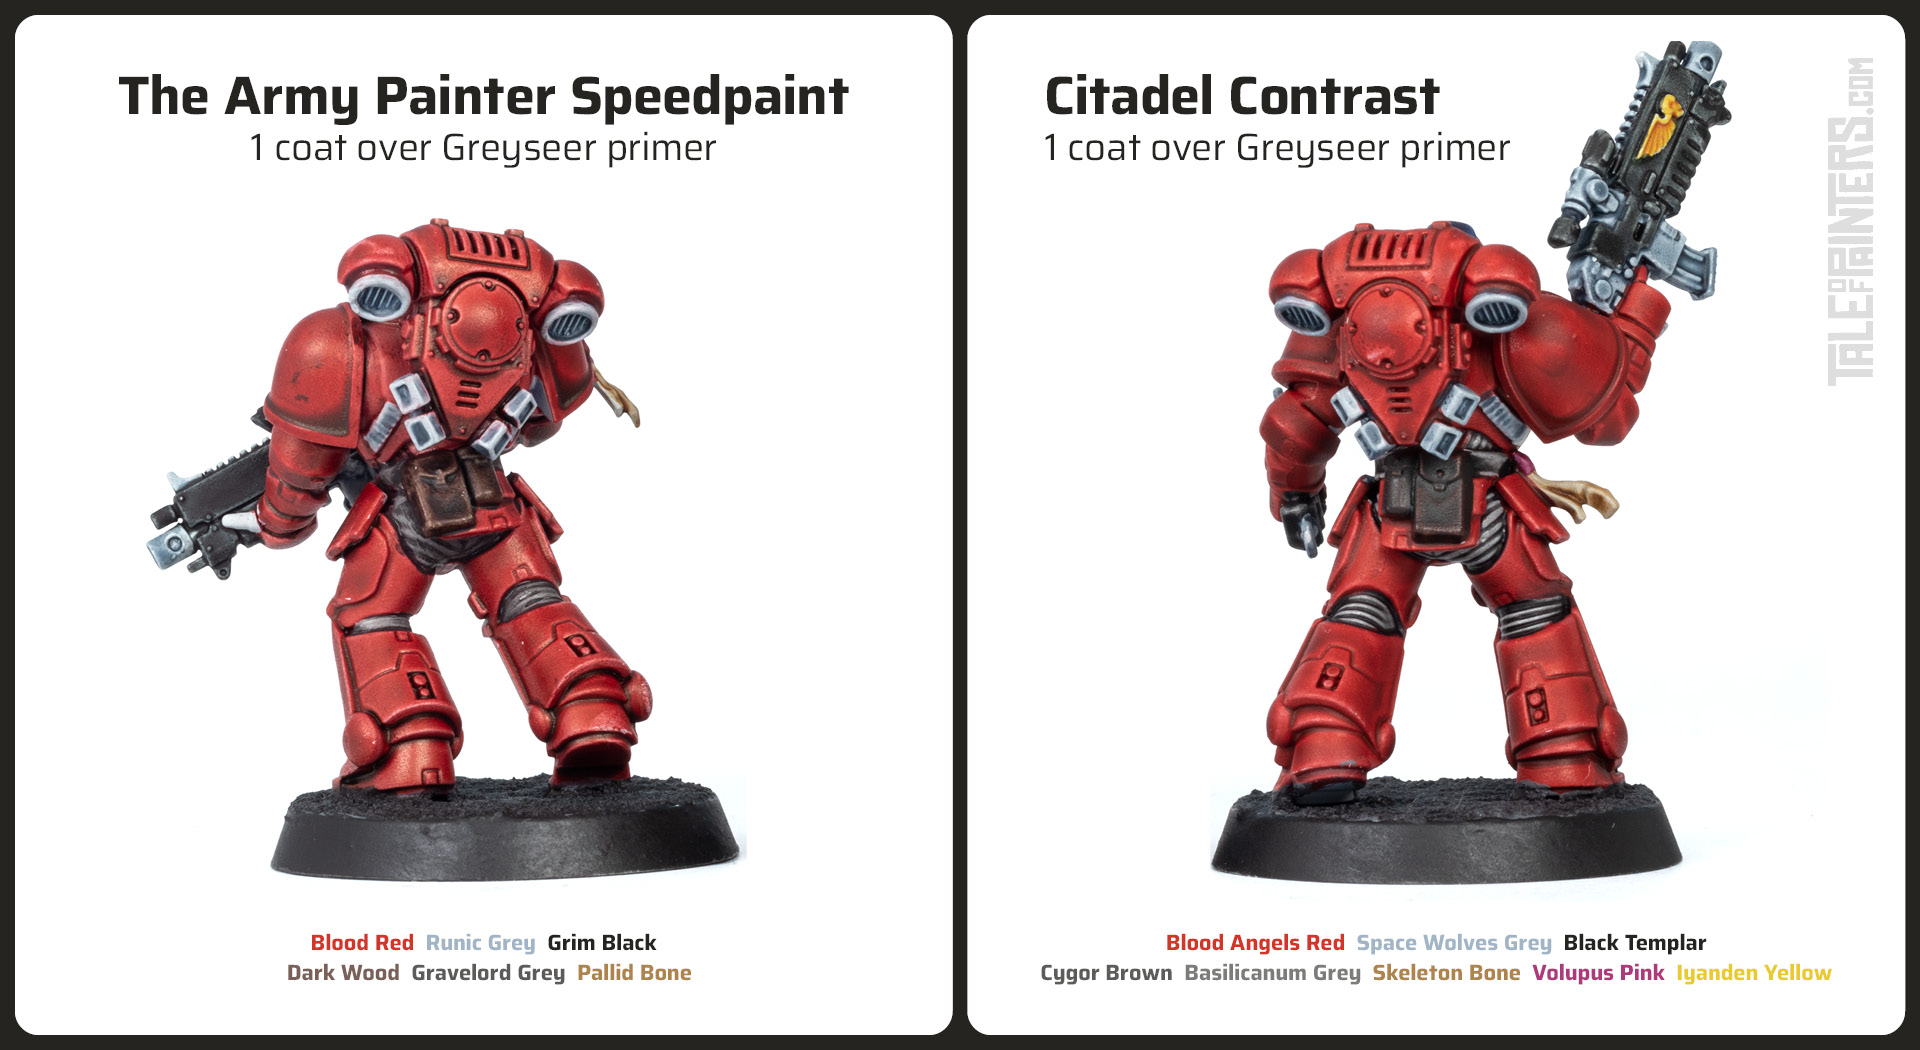 Comparison between Speedpaint and Citadel Contrast, back view